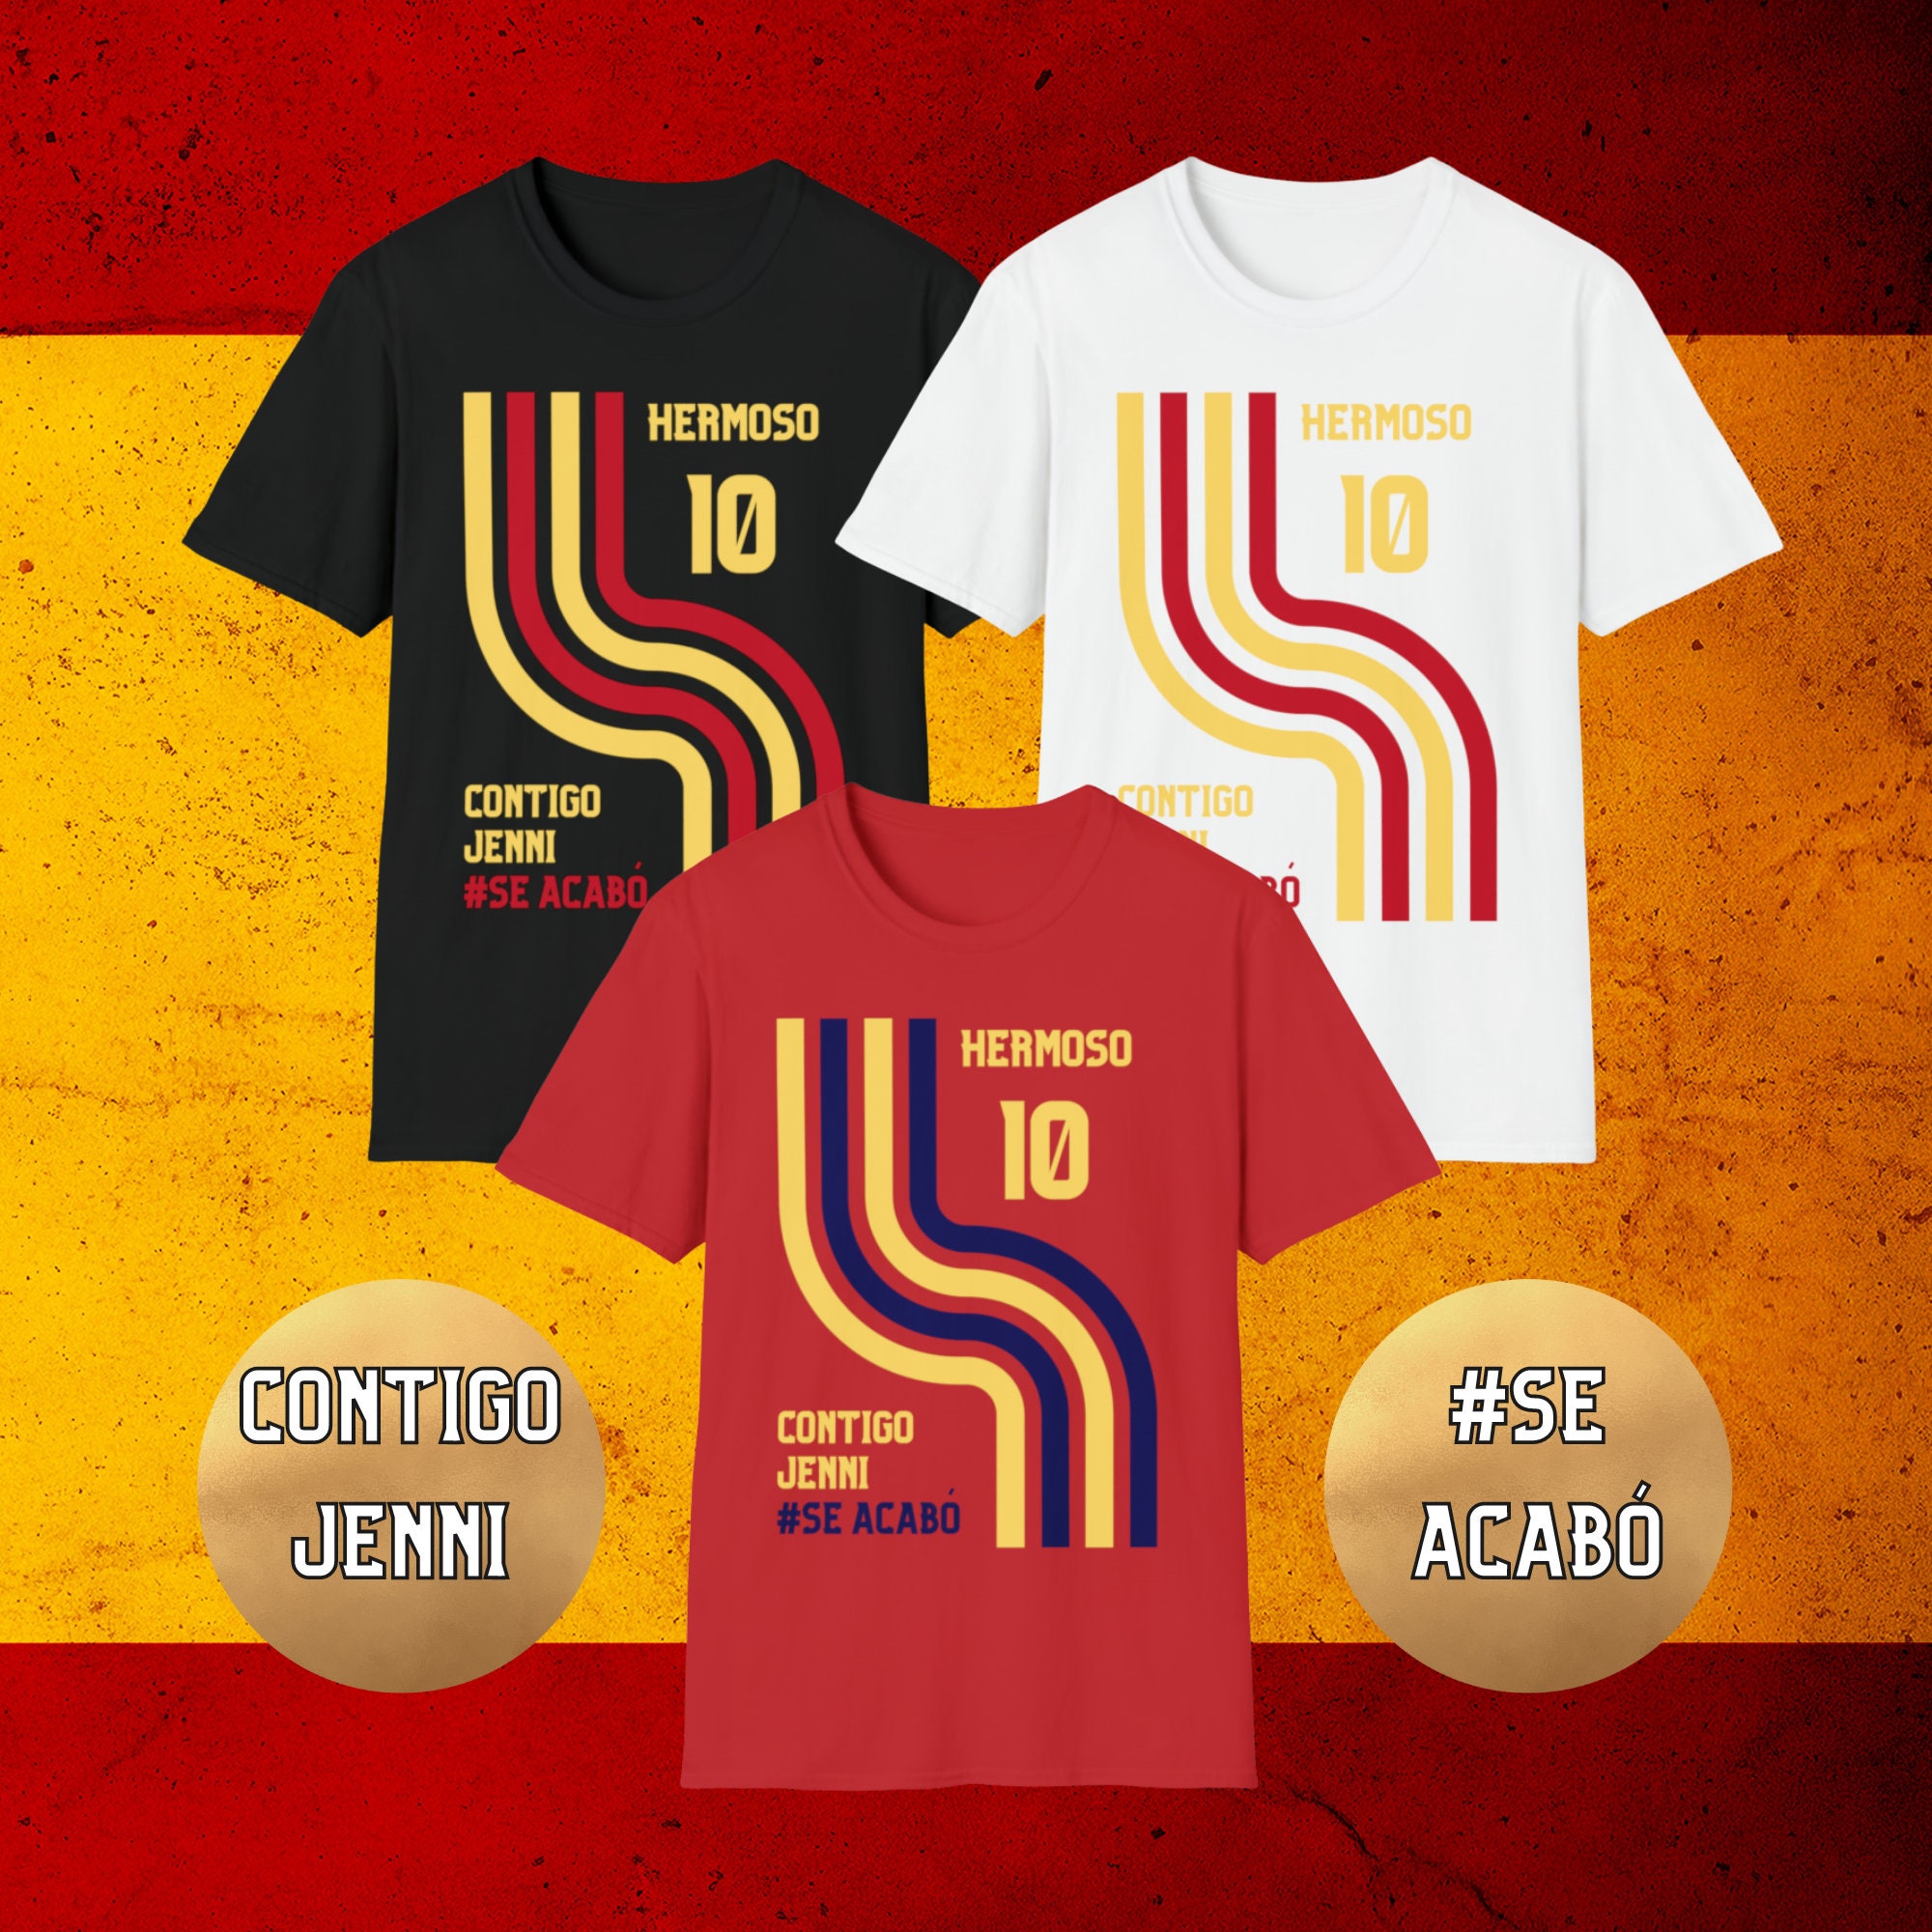 Iniesta Spain 2010 WORLD CUP FINAL Soccer Away Jersey Shirt L SKU# P47 –  foreversoccerjerseys